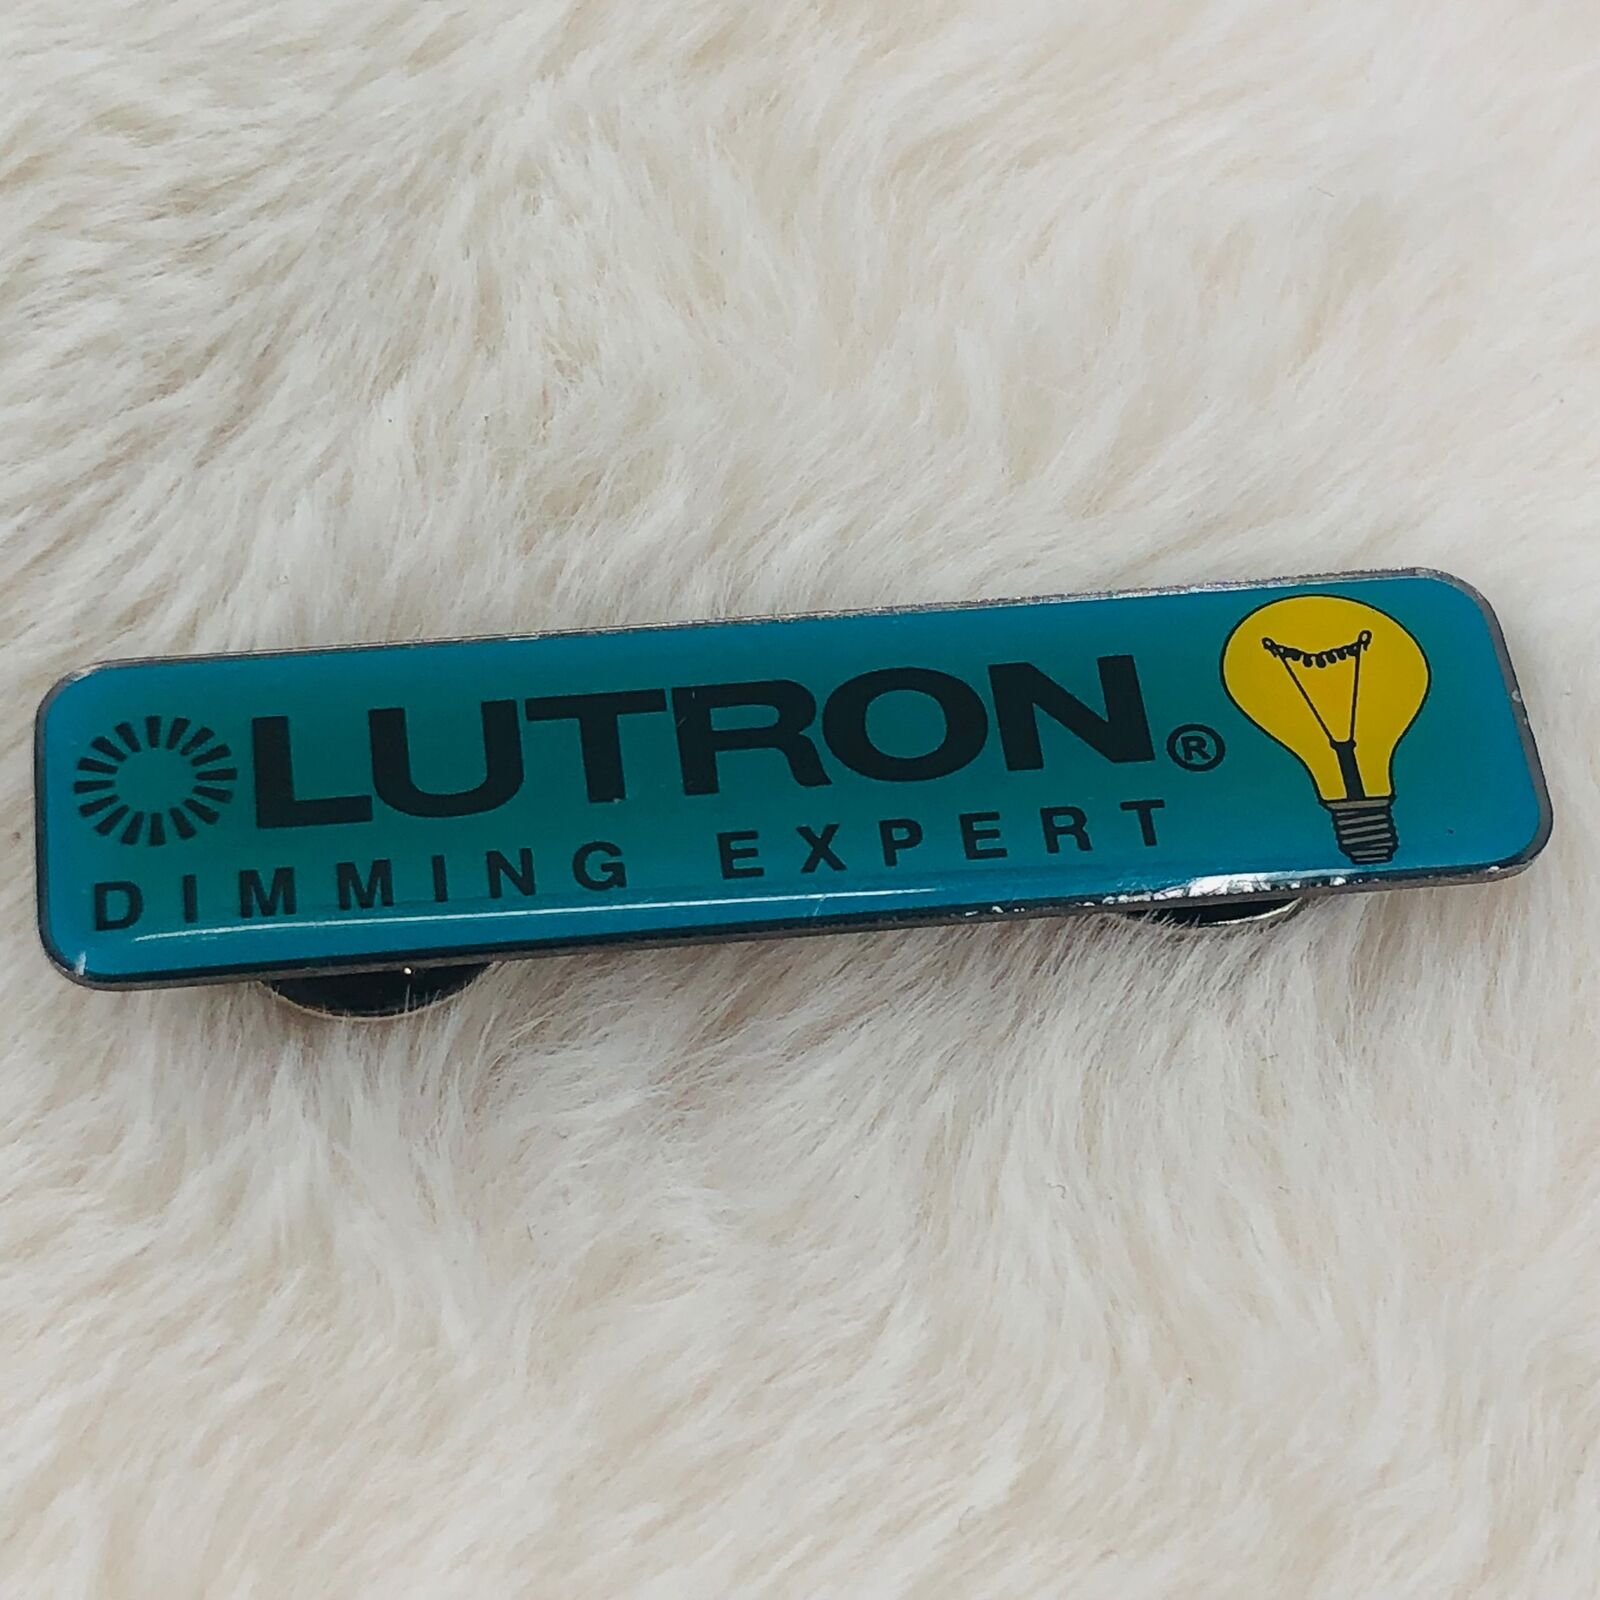 Home Depot Employee Advertising Apron Pin - Lutron Dimming Expert